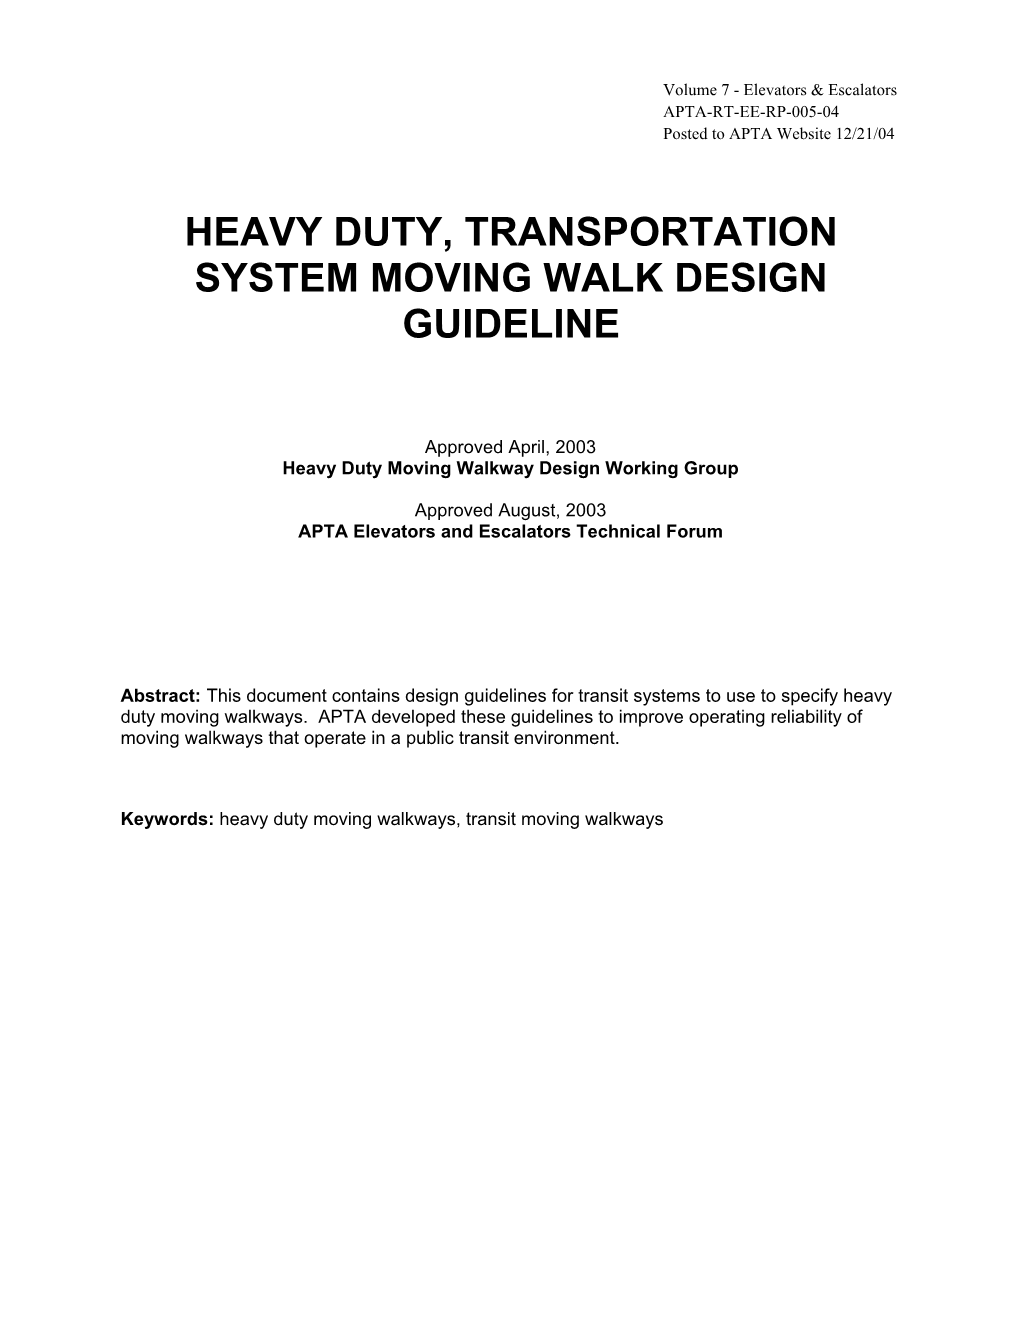 Heavy Duty, Transportation System Moving Walk Design Guideline